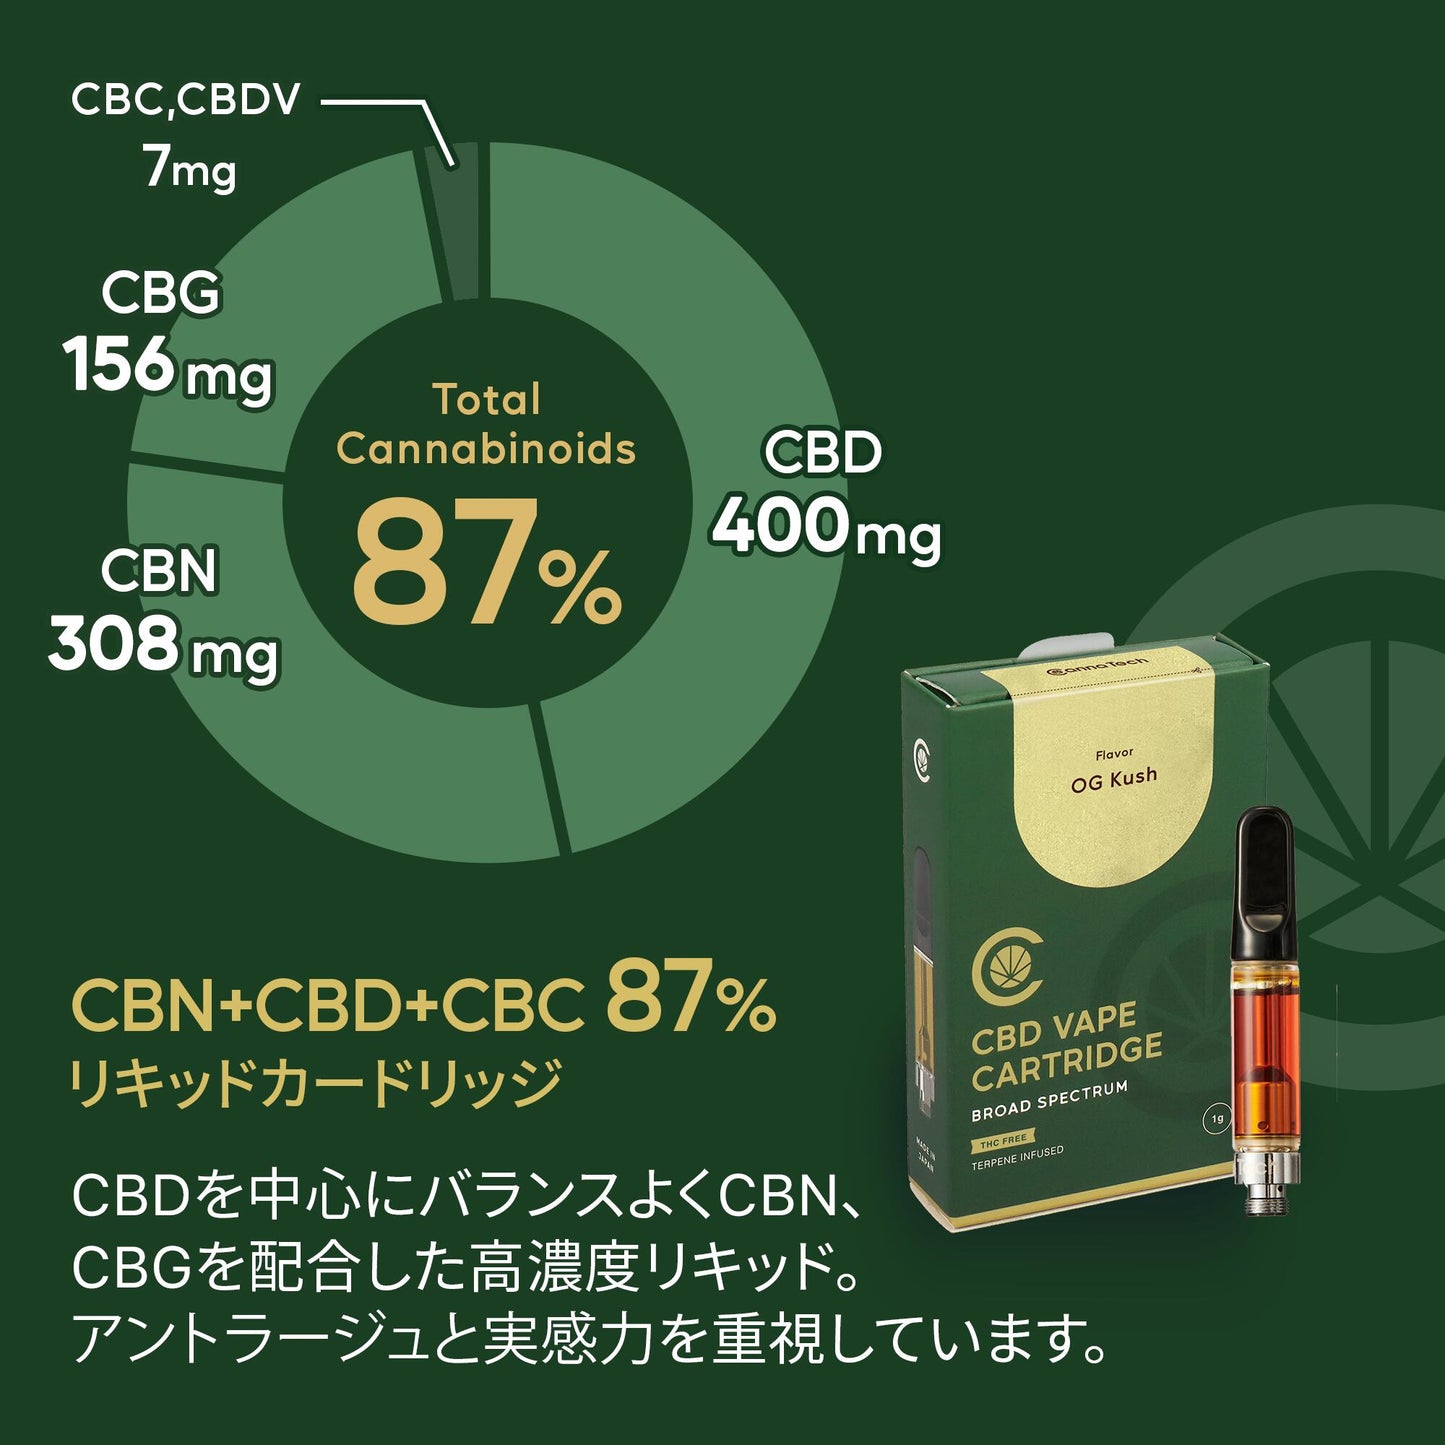 CBD リキッド 87% CBN CBG 配合 カートリッジ 1g  ( CBD 400mg CBN 308mg CBG 156mg )